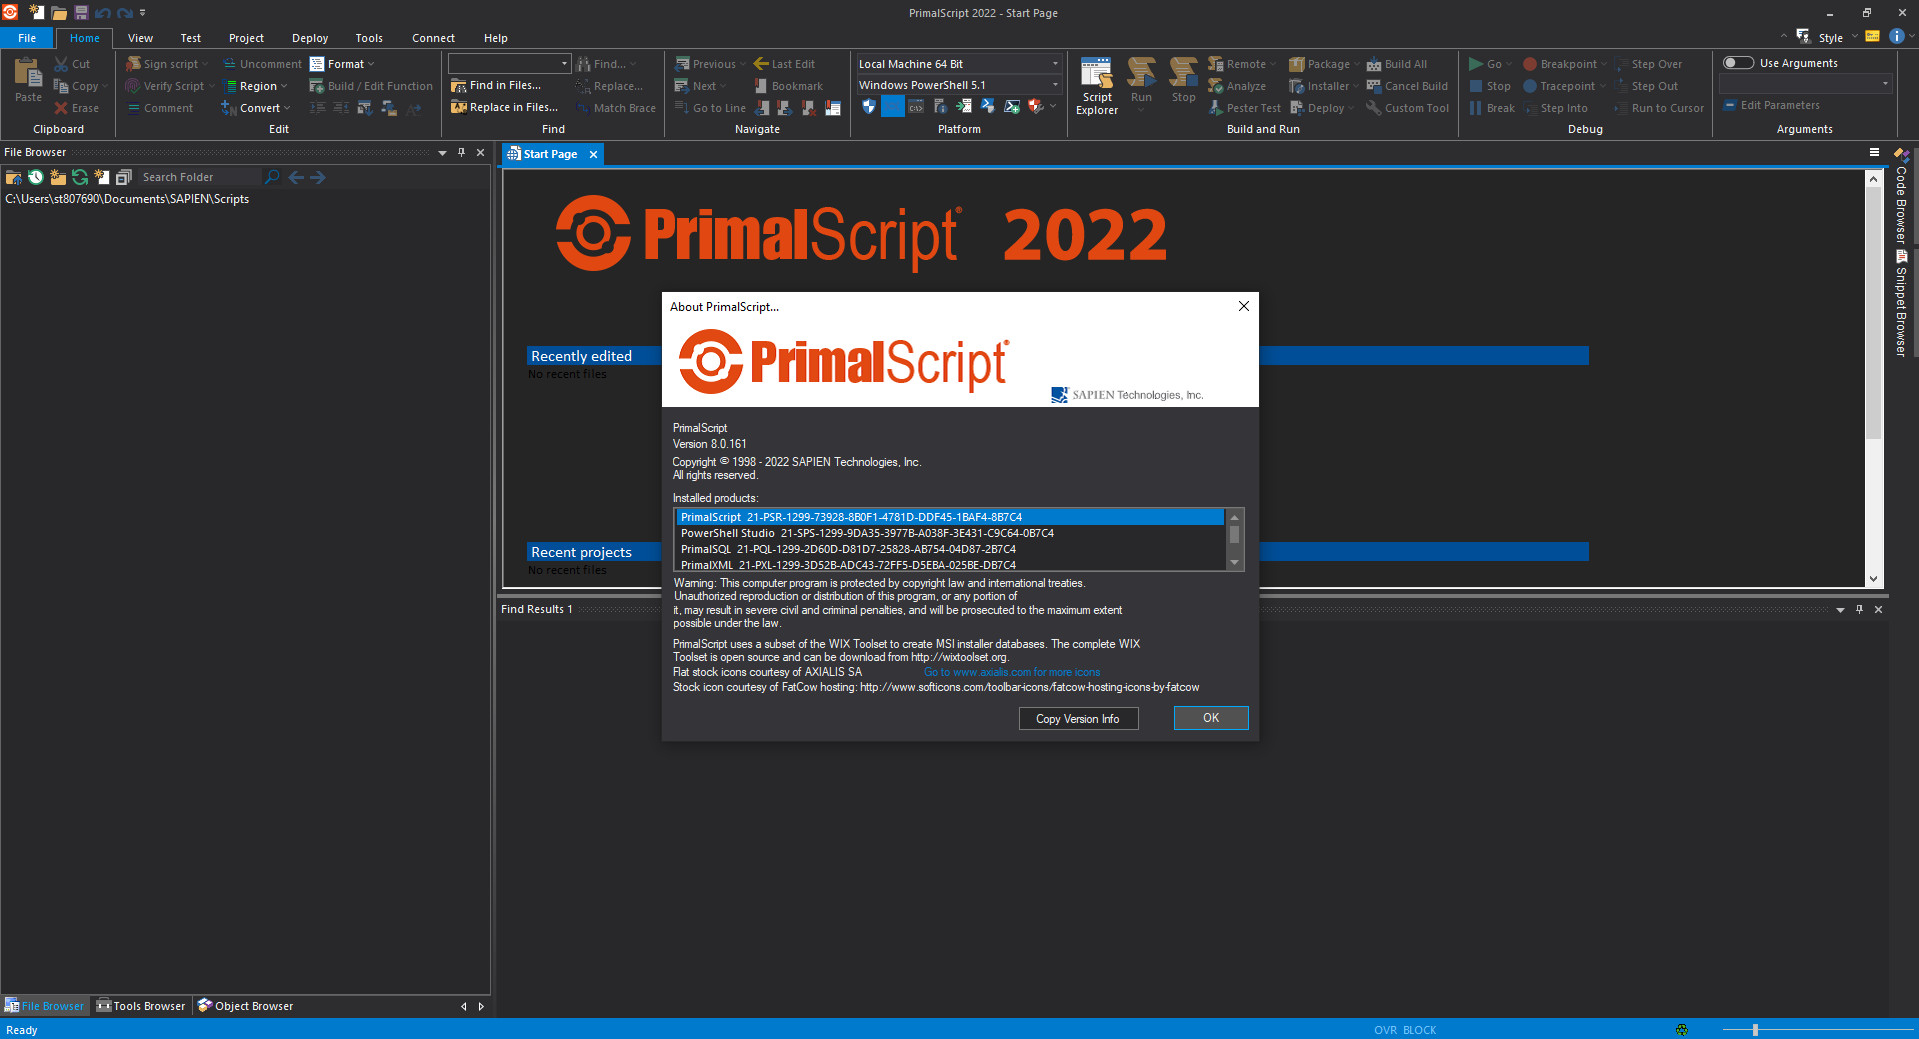 SAPIEN PrimalScript 2022 v8.0.161 [En]